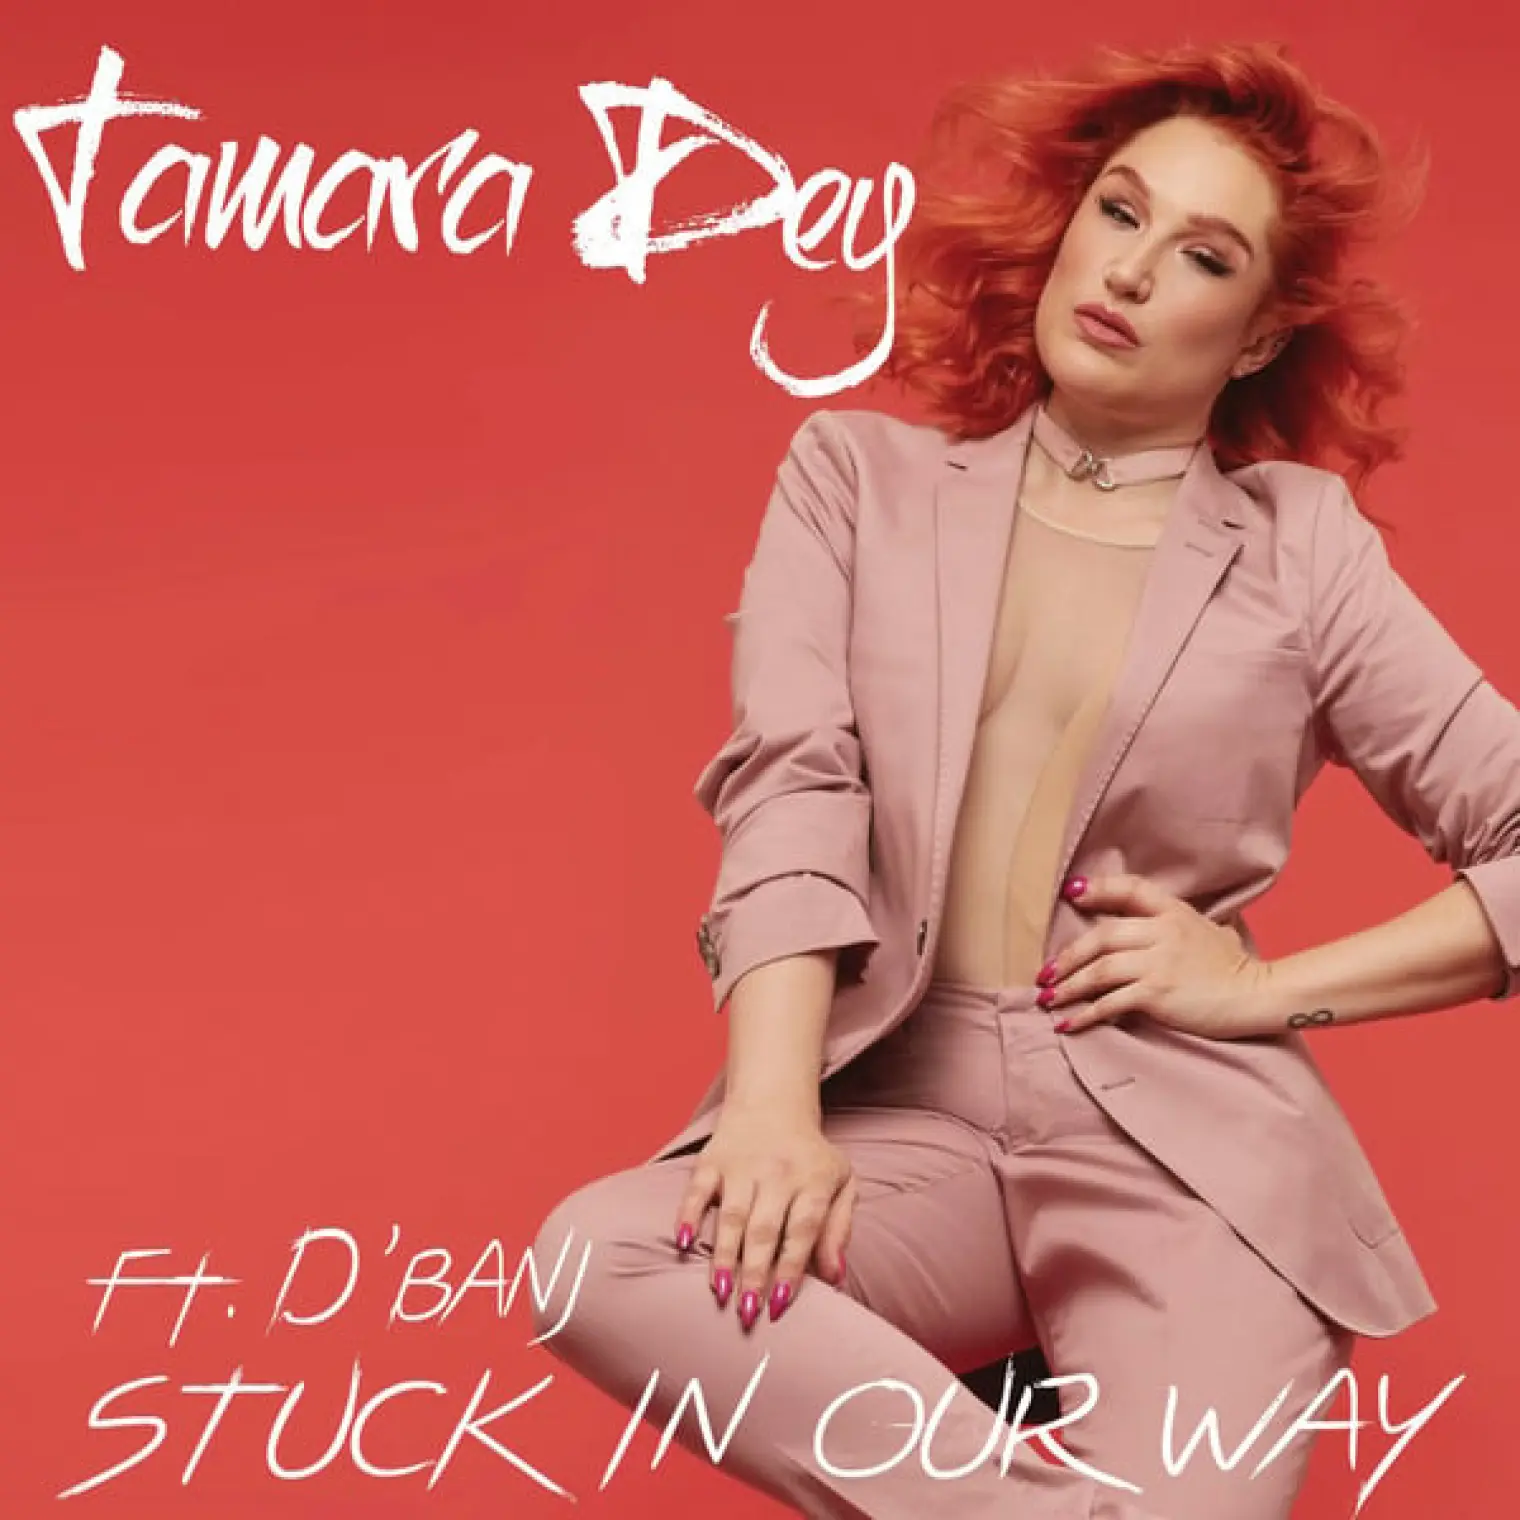 Stuck In Our Way -  Tamara Dey 